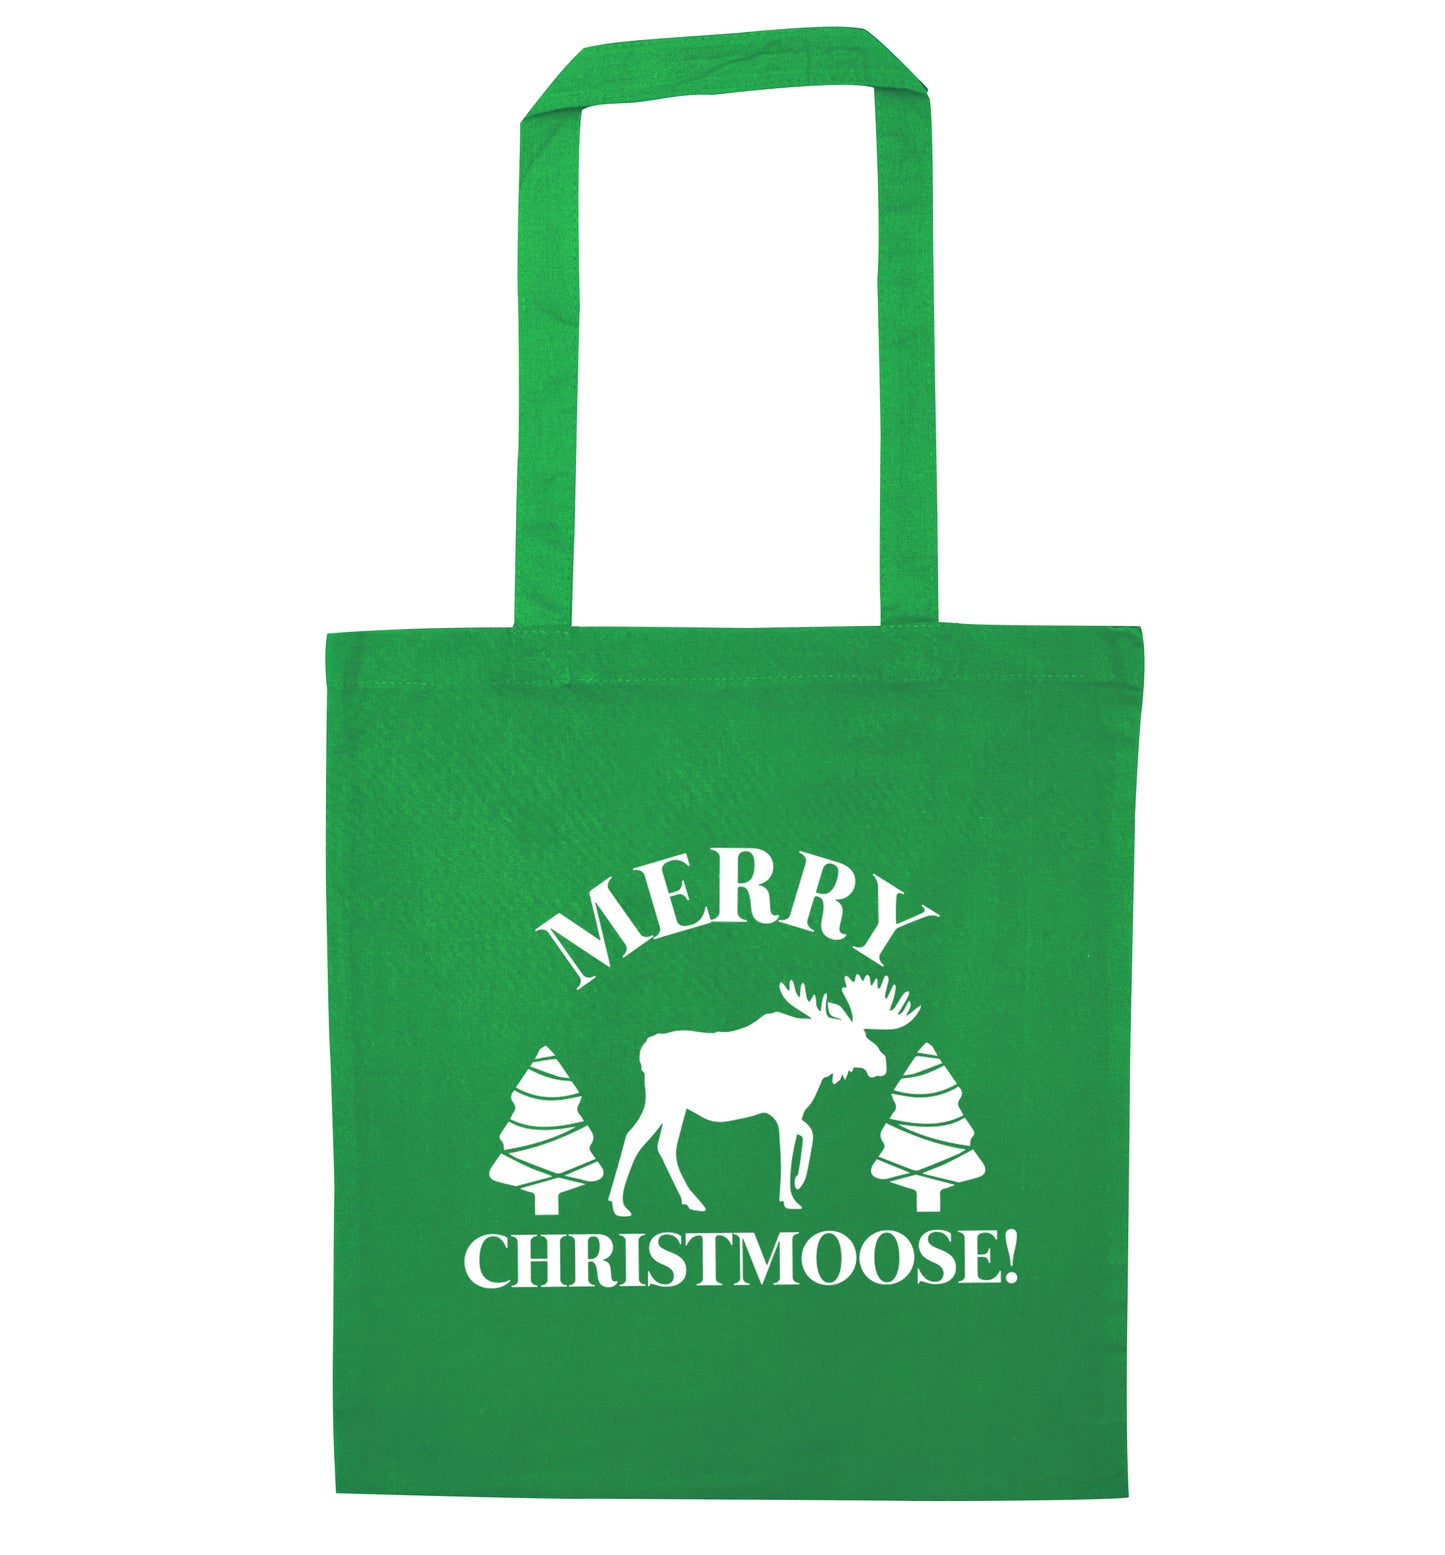 Merry Christmoose green tote bag